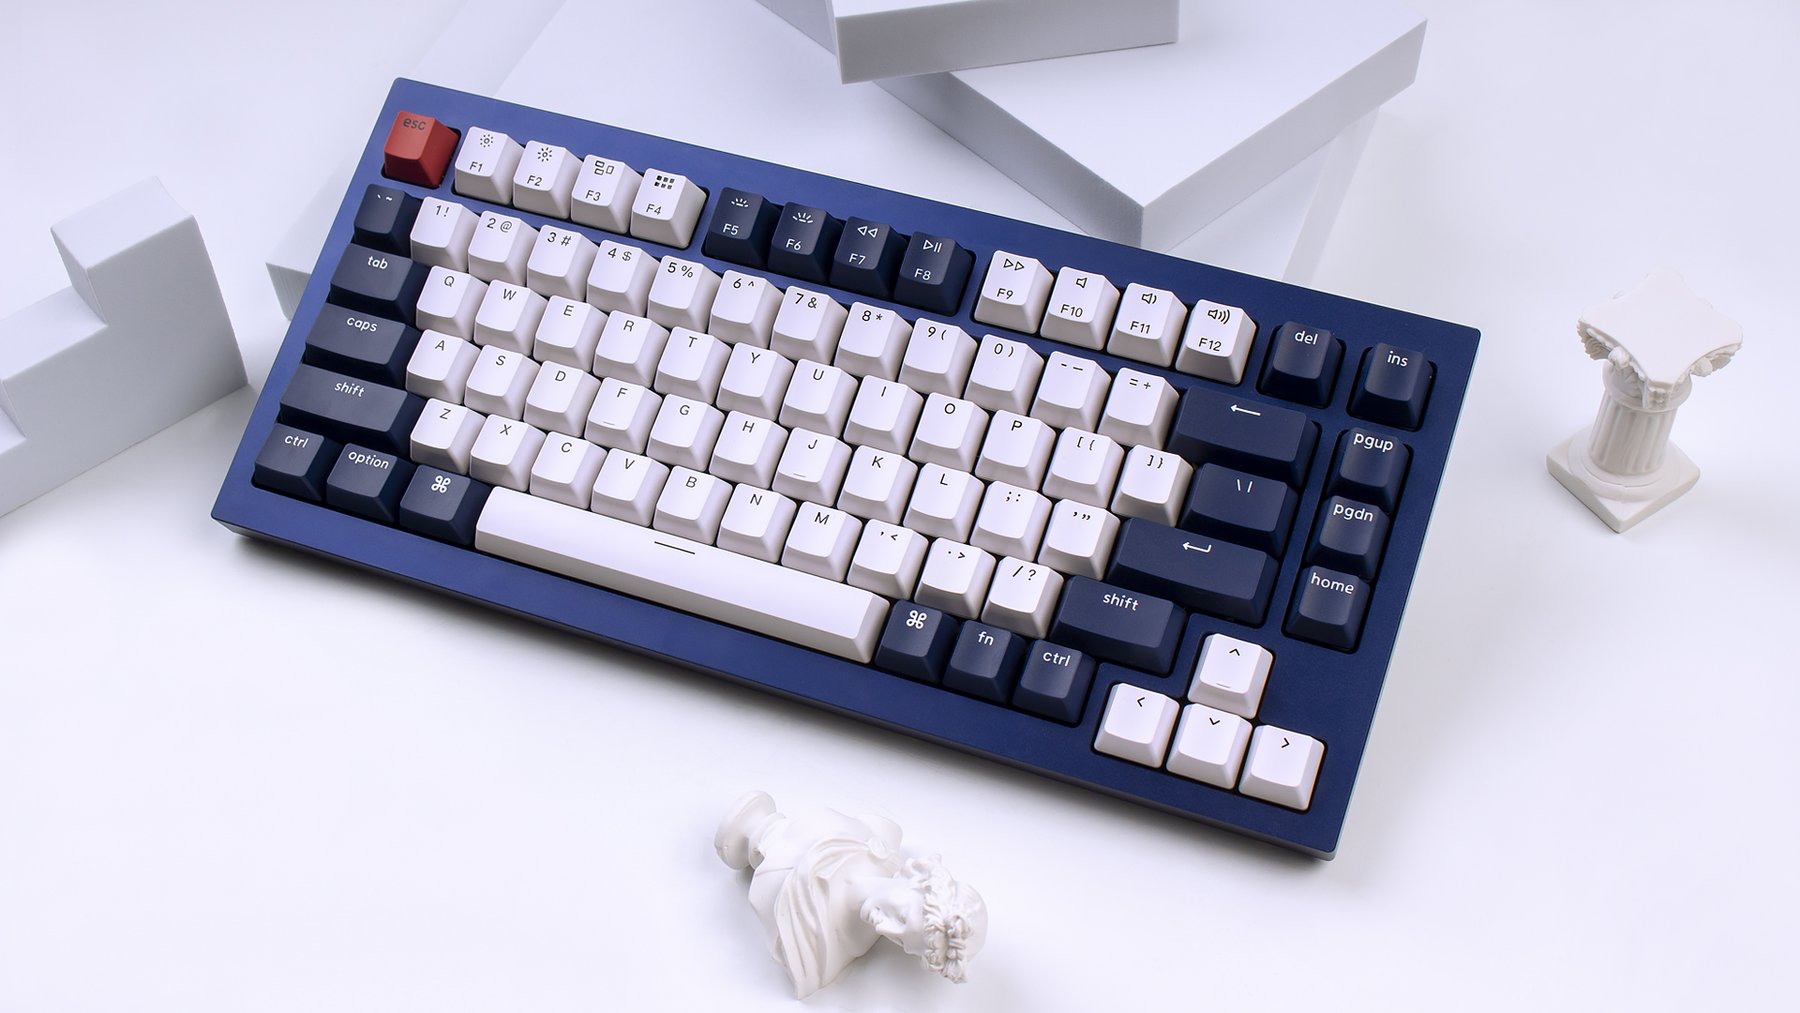 Keychron - Q1J1 QMK Custom Mechanical Keyboard - Fully Assembled Navy Blue